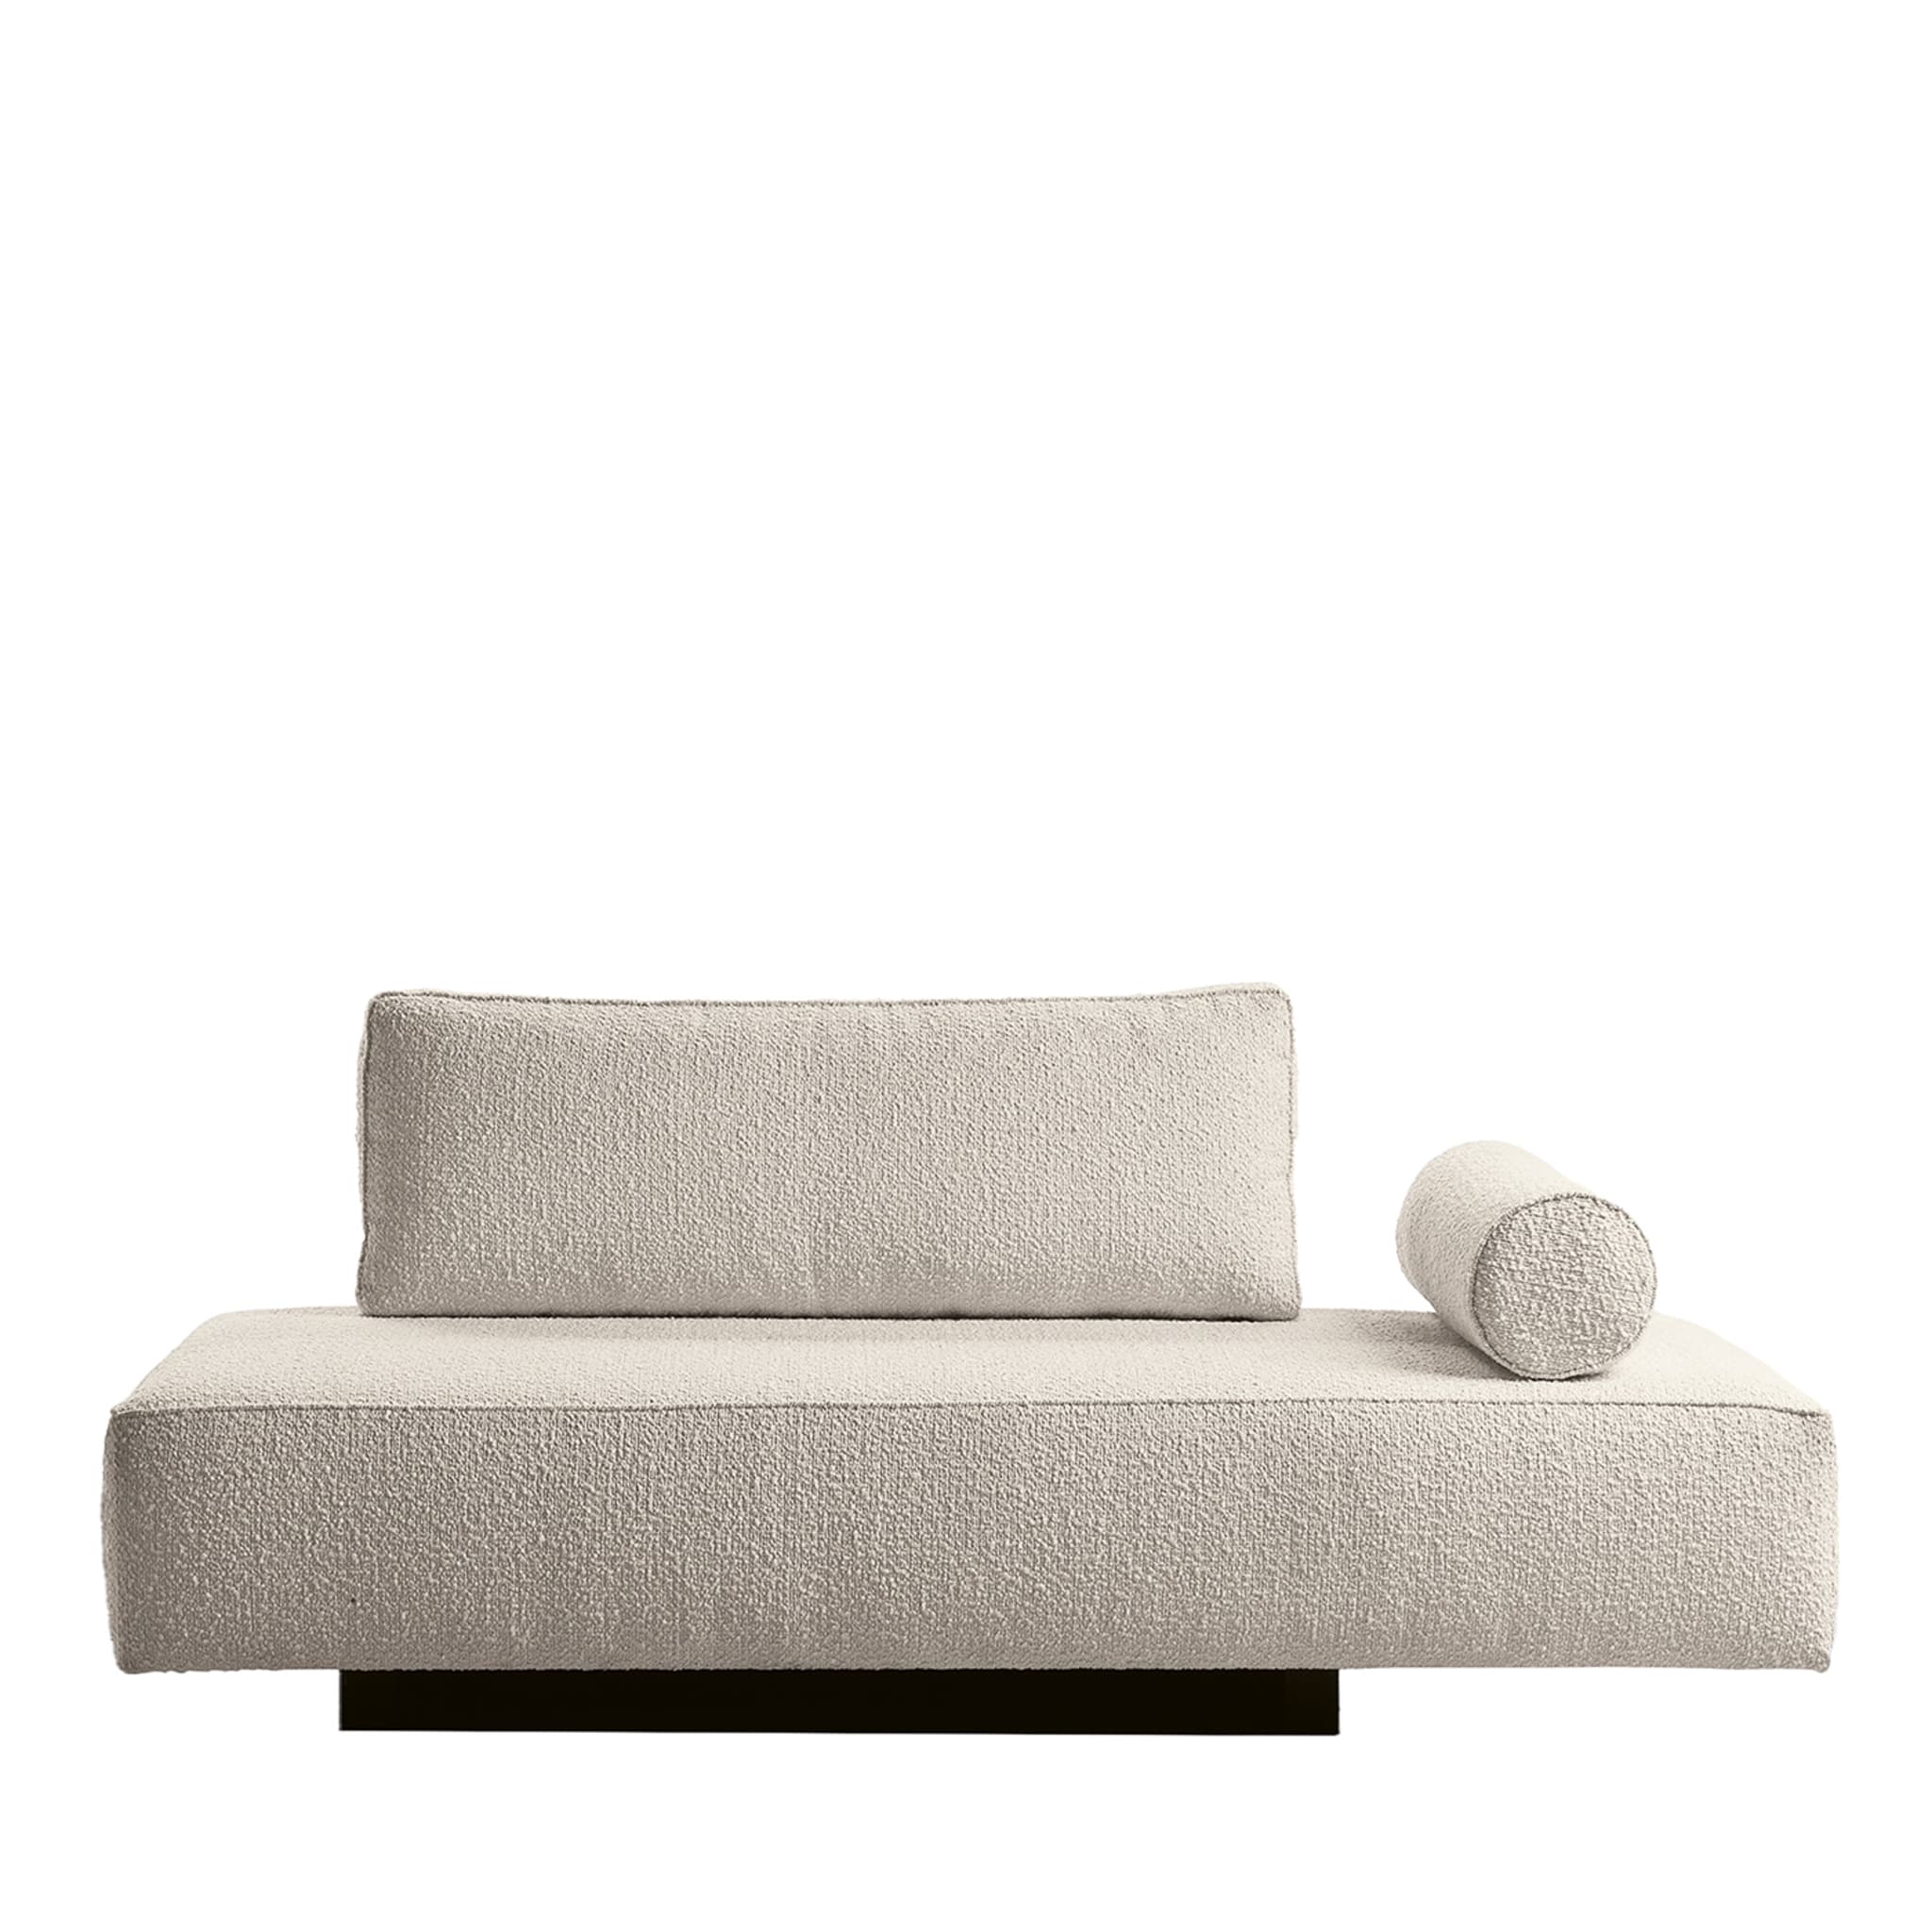 Zelig White Sofa by Dainelli Studio - Main view